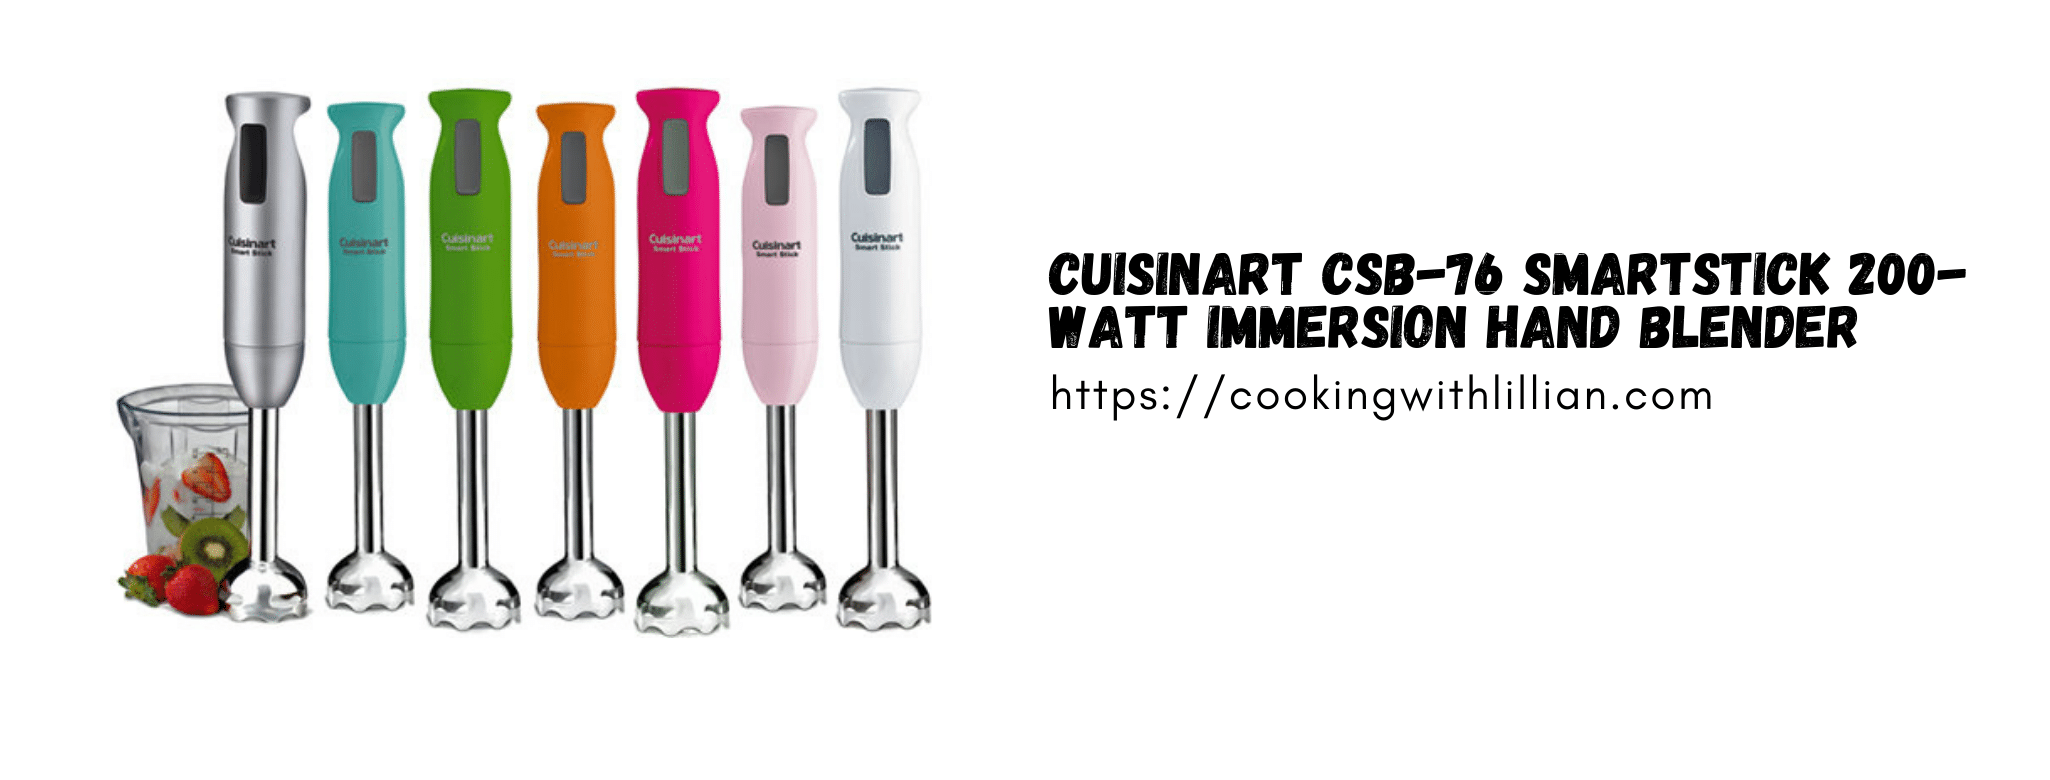 Cuisinart CSB-76 SmartStick 200-Watt Immersion Hand Blender